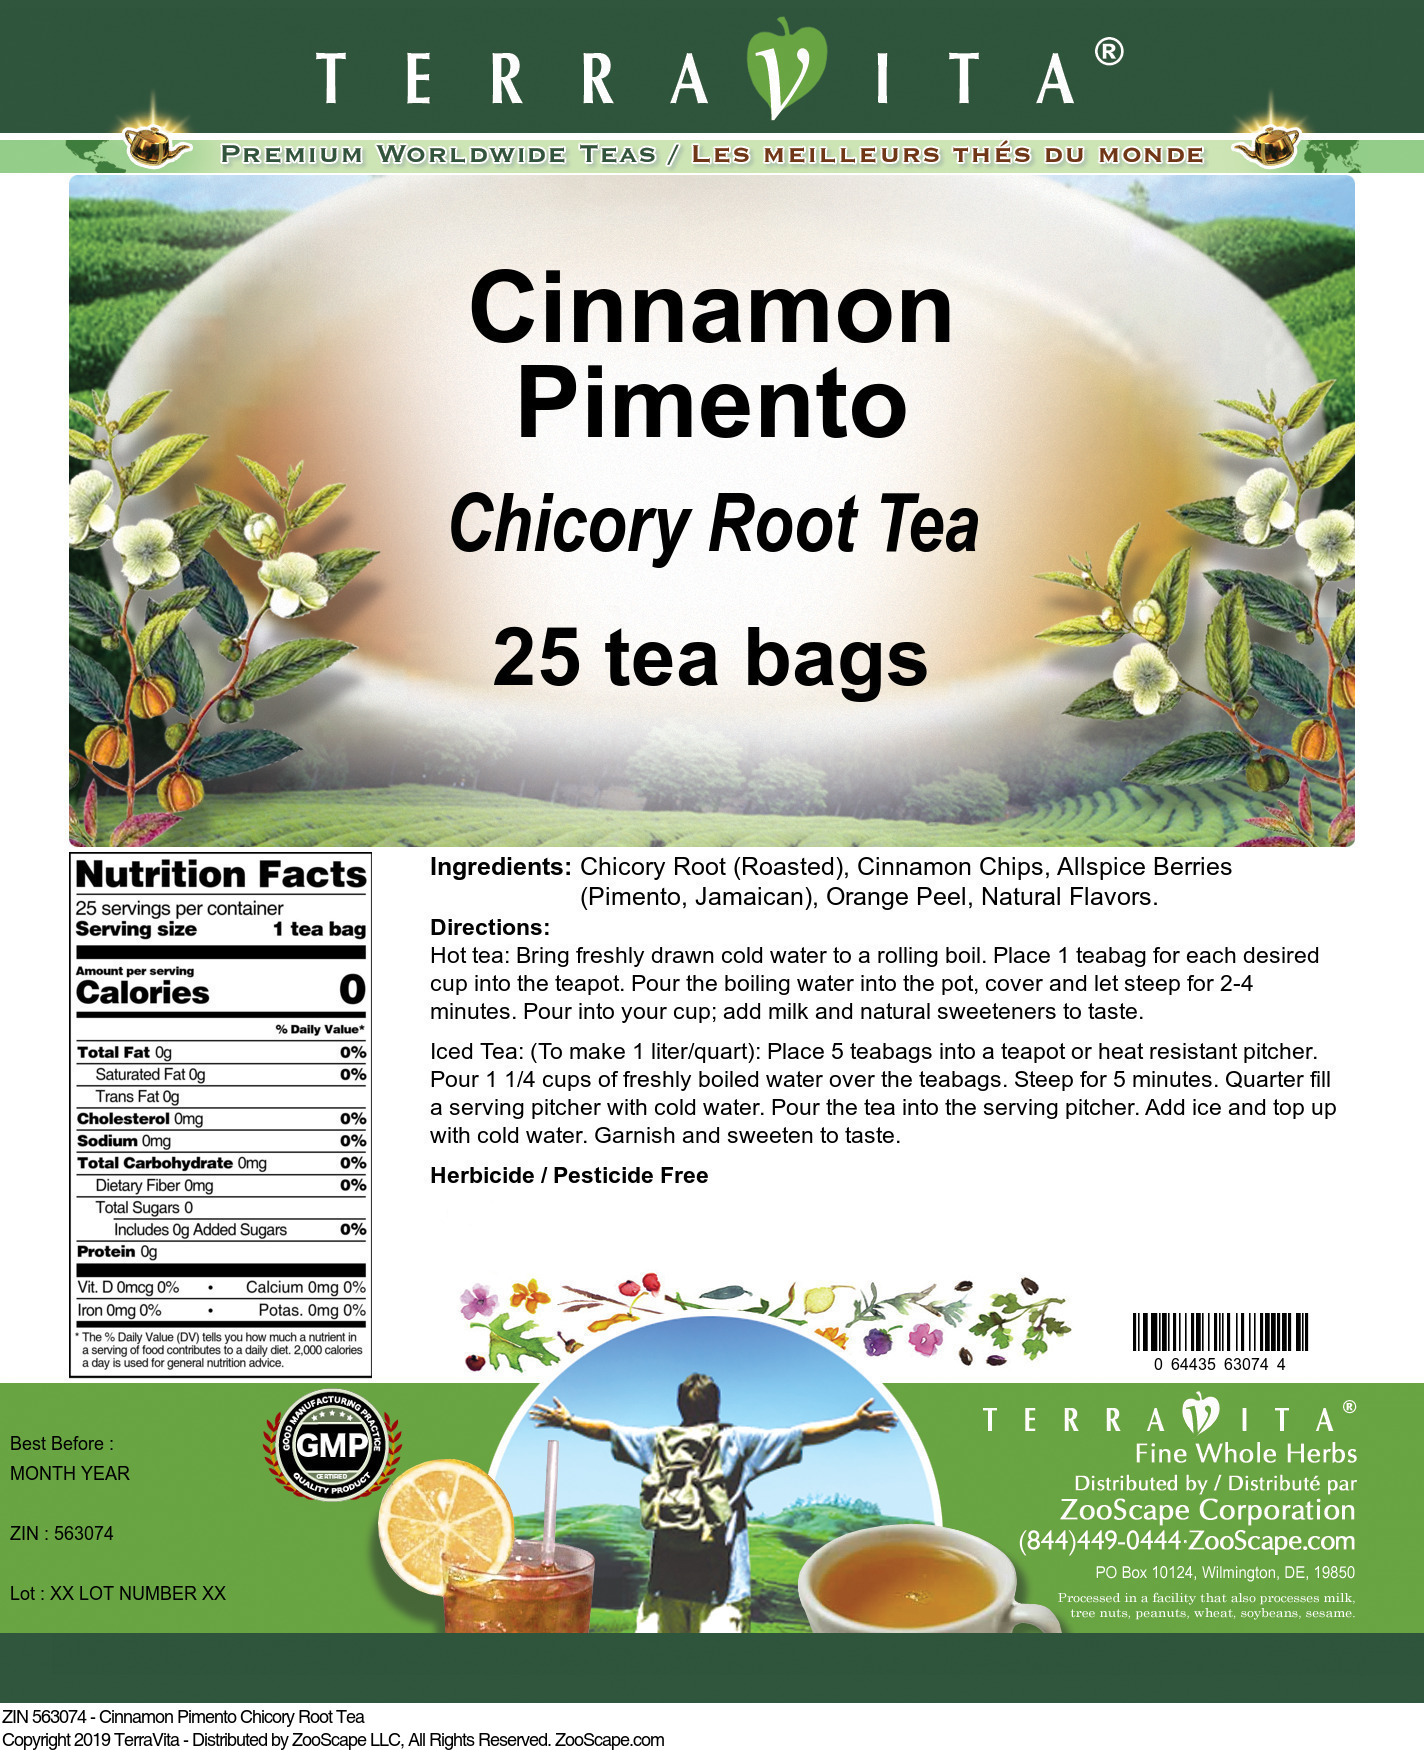 Cinnamon Pimento Chicory Root Tea - Label